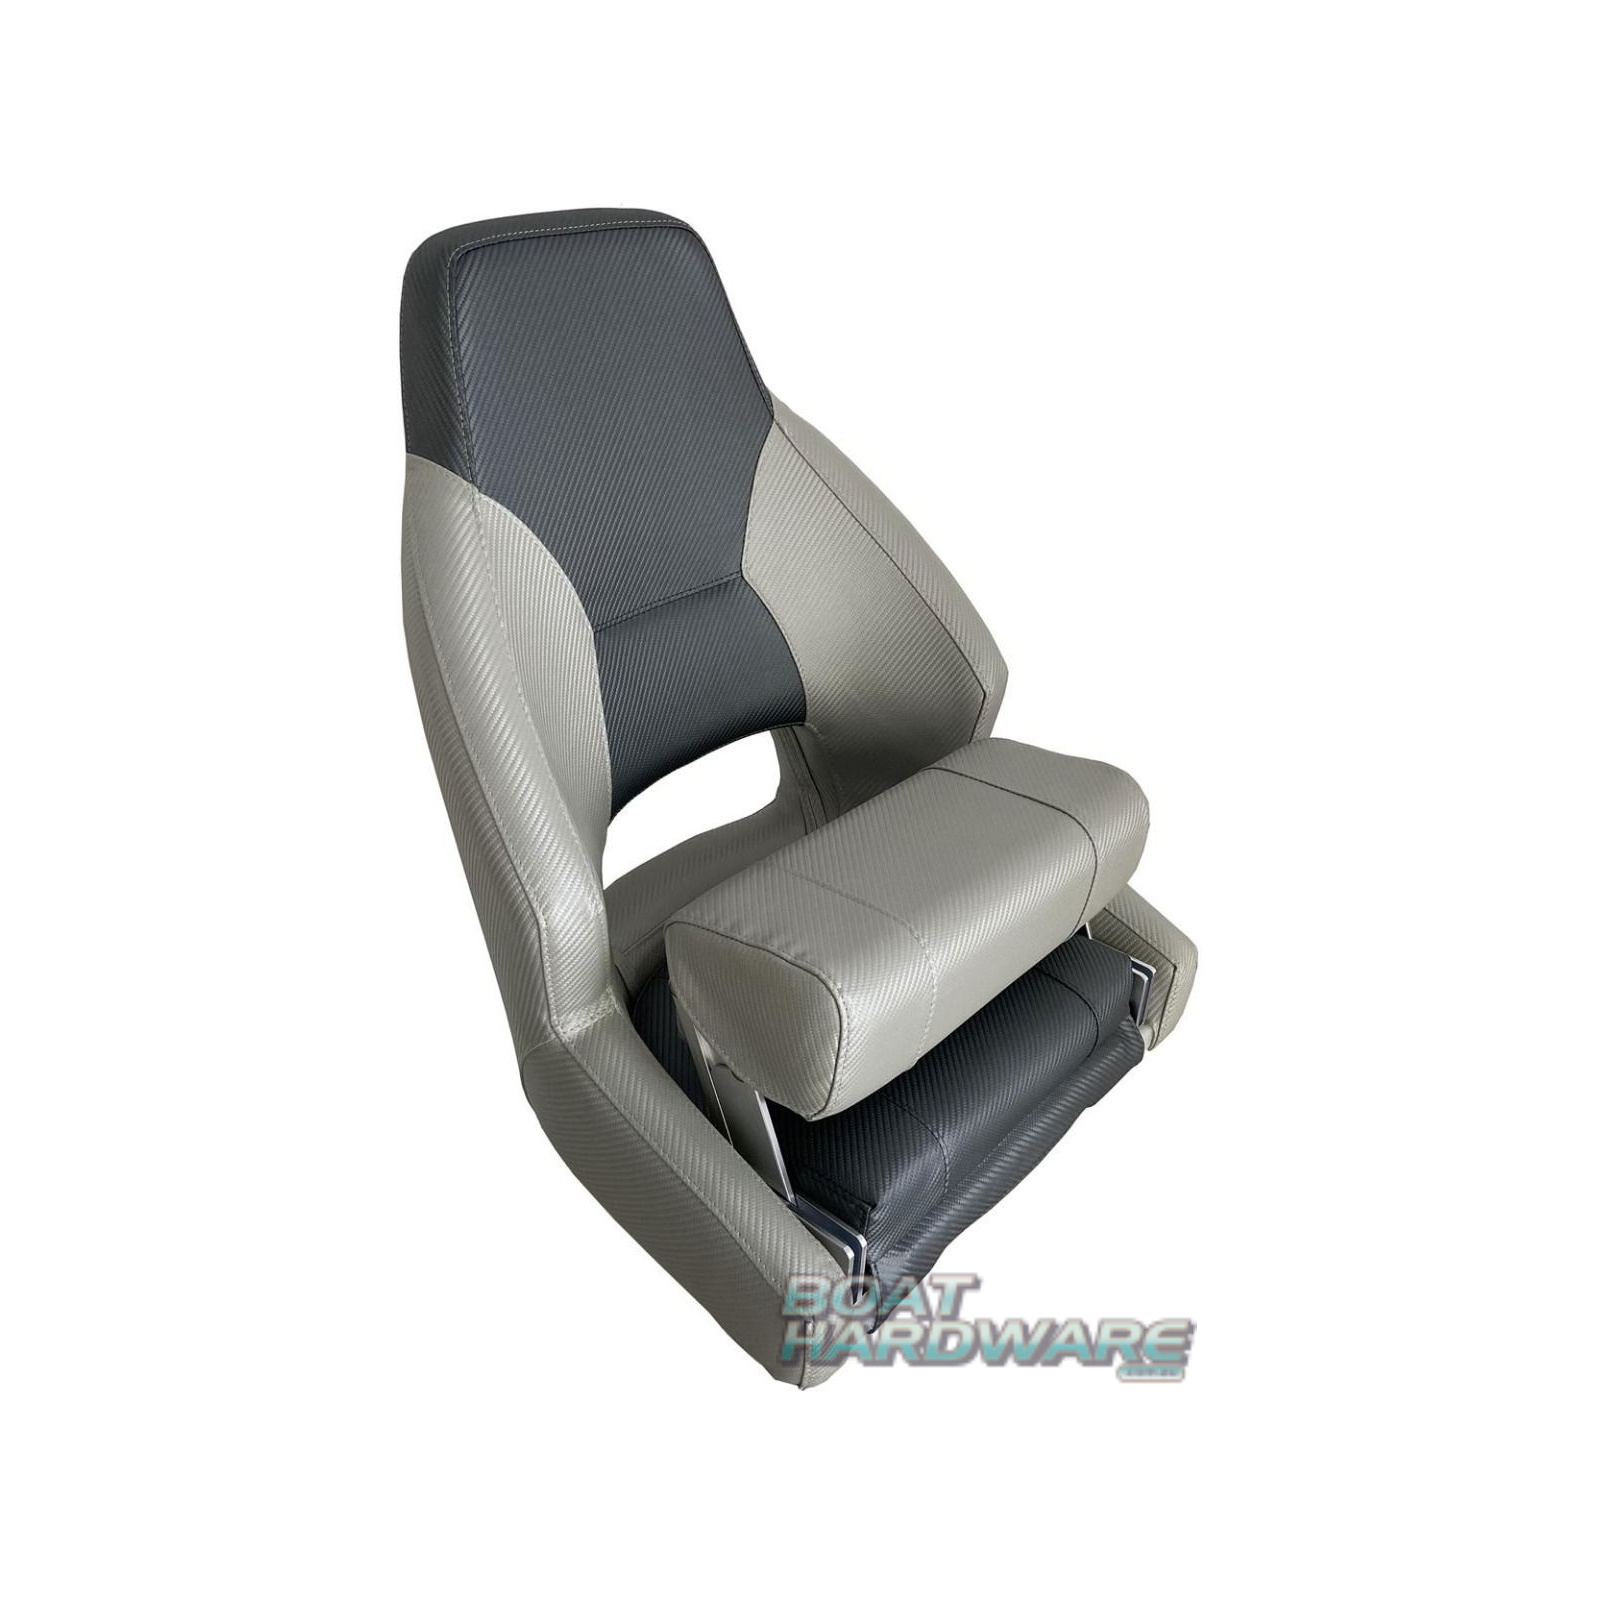 MiDMarine 2 x Premium Centurion Boat Seats Grey/Charcoal Style 